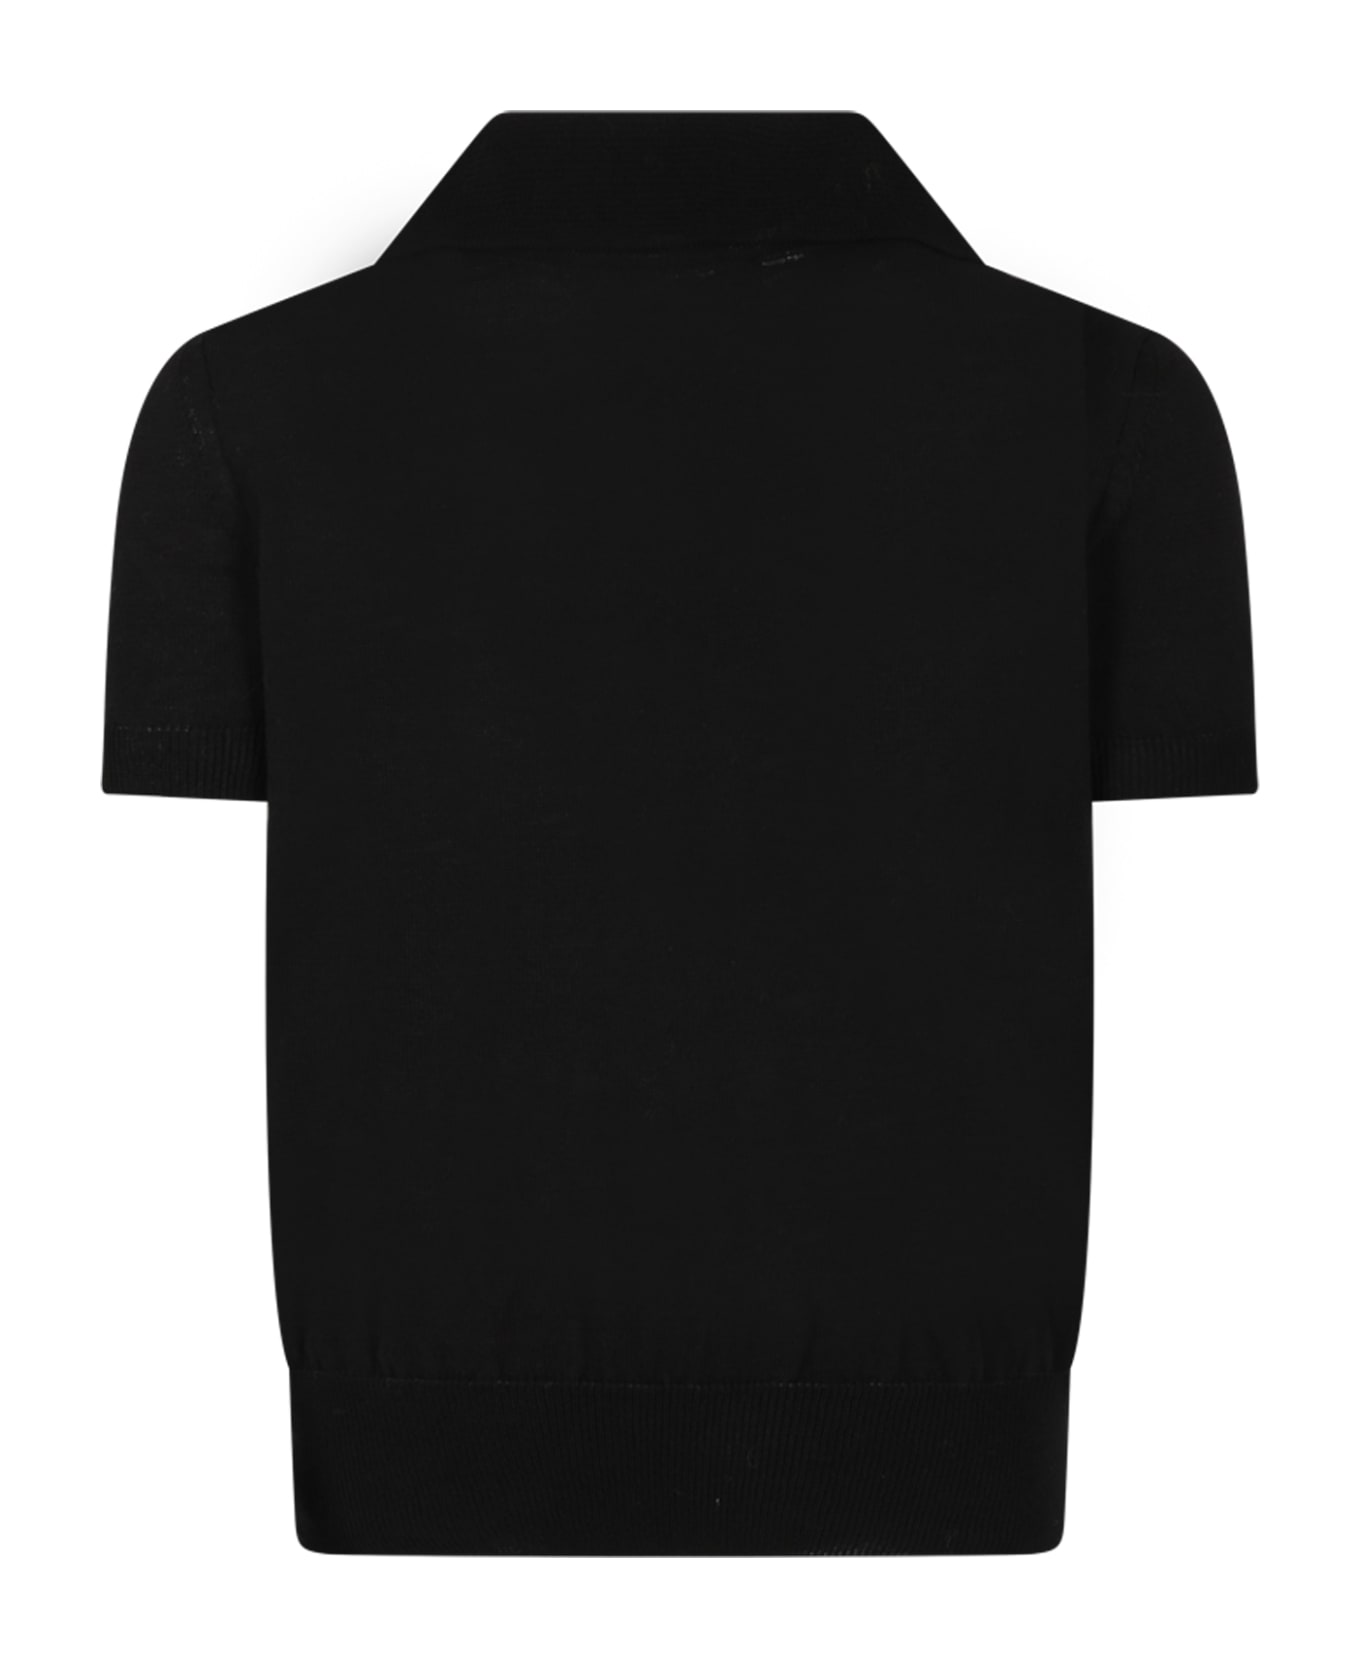 Neil Barrett Black Polo For Boy With Iconic Lightning Bolt - Black Tシャツ＆ポロシャツ